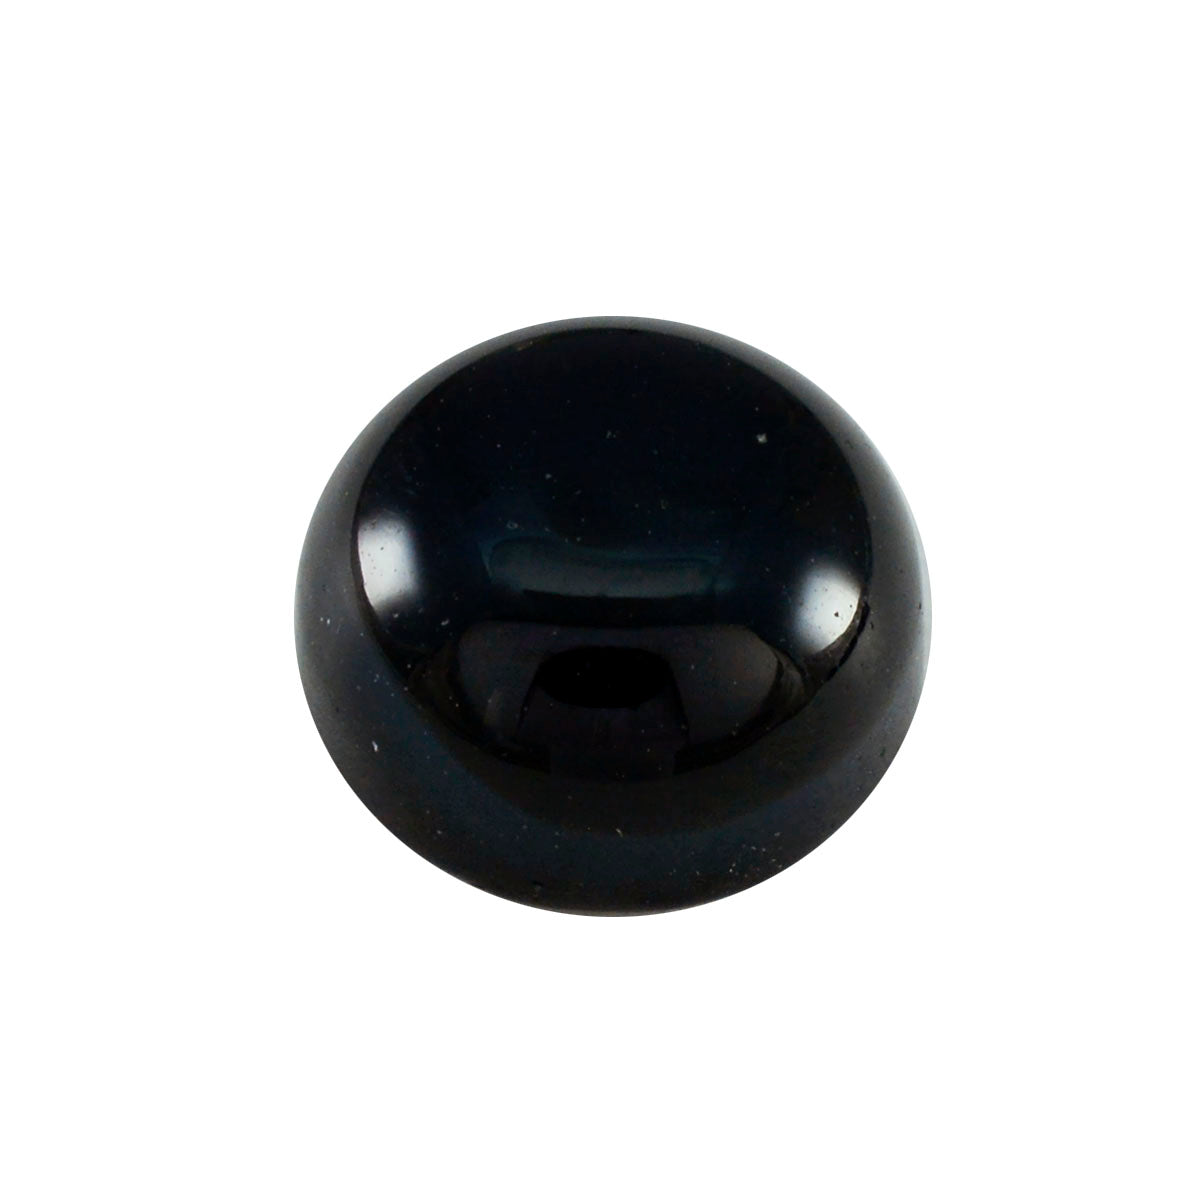 Riyogems 1PC Black Onyx Cabochon 13x13 mm Round Shape good-looking Quality Loose Stone